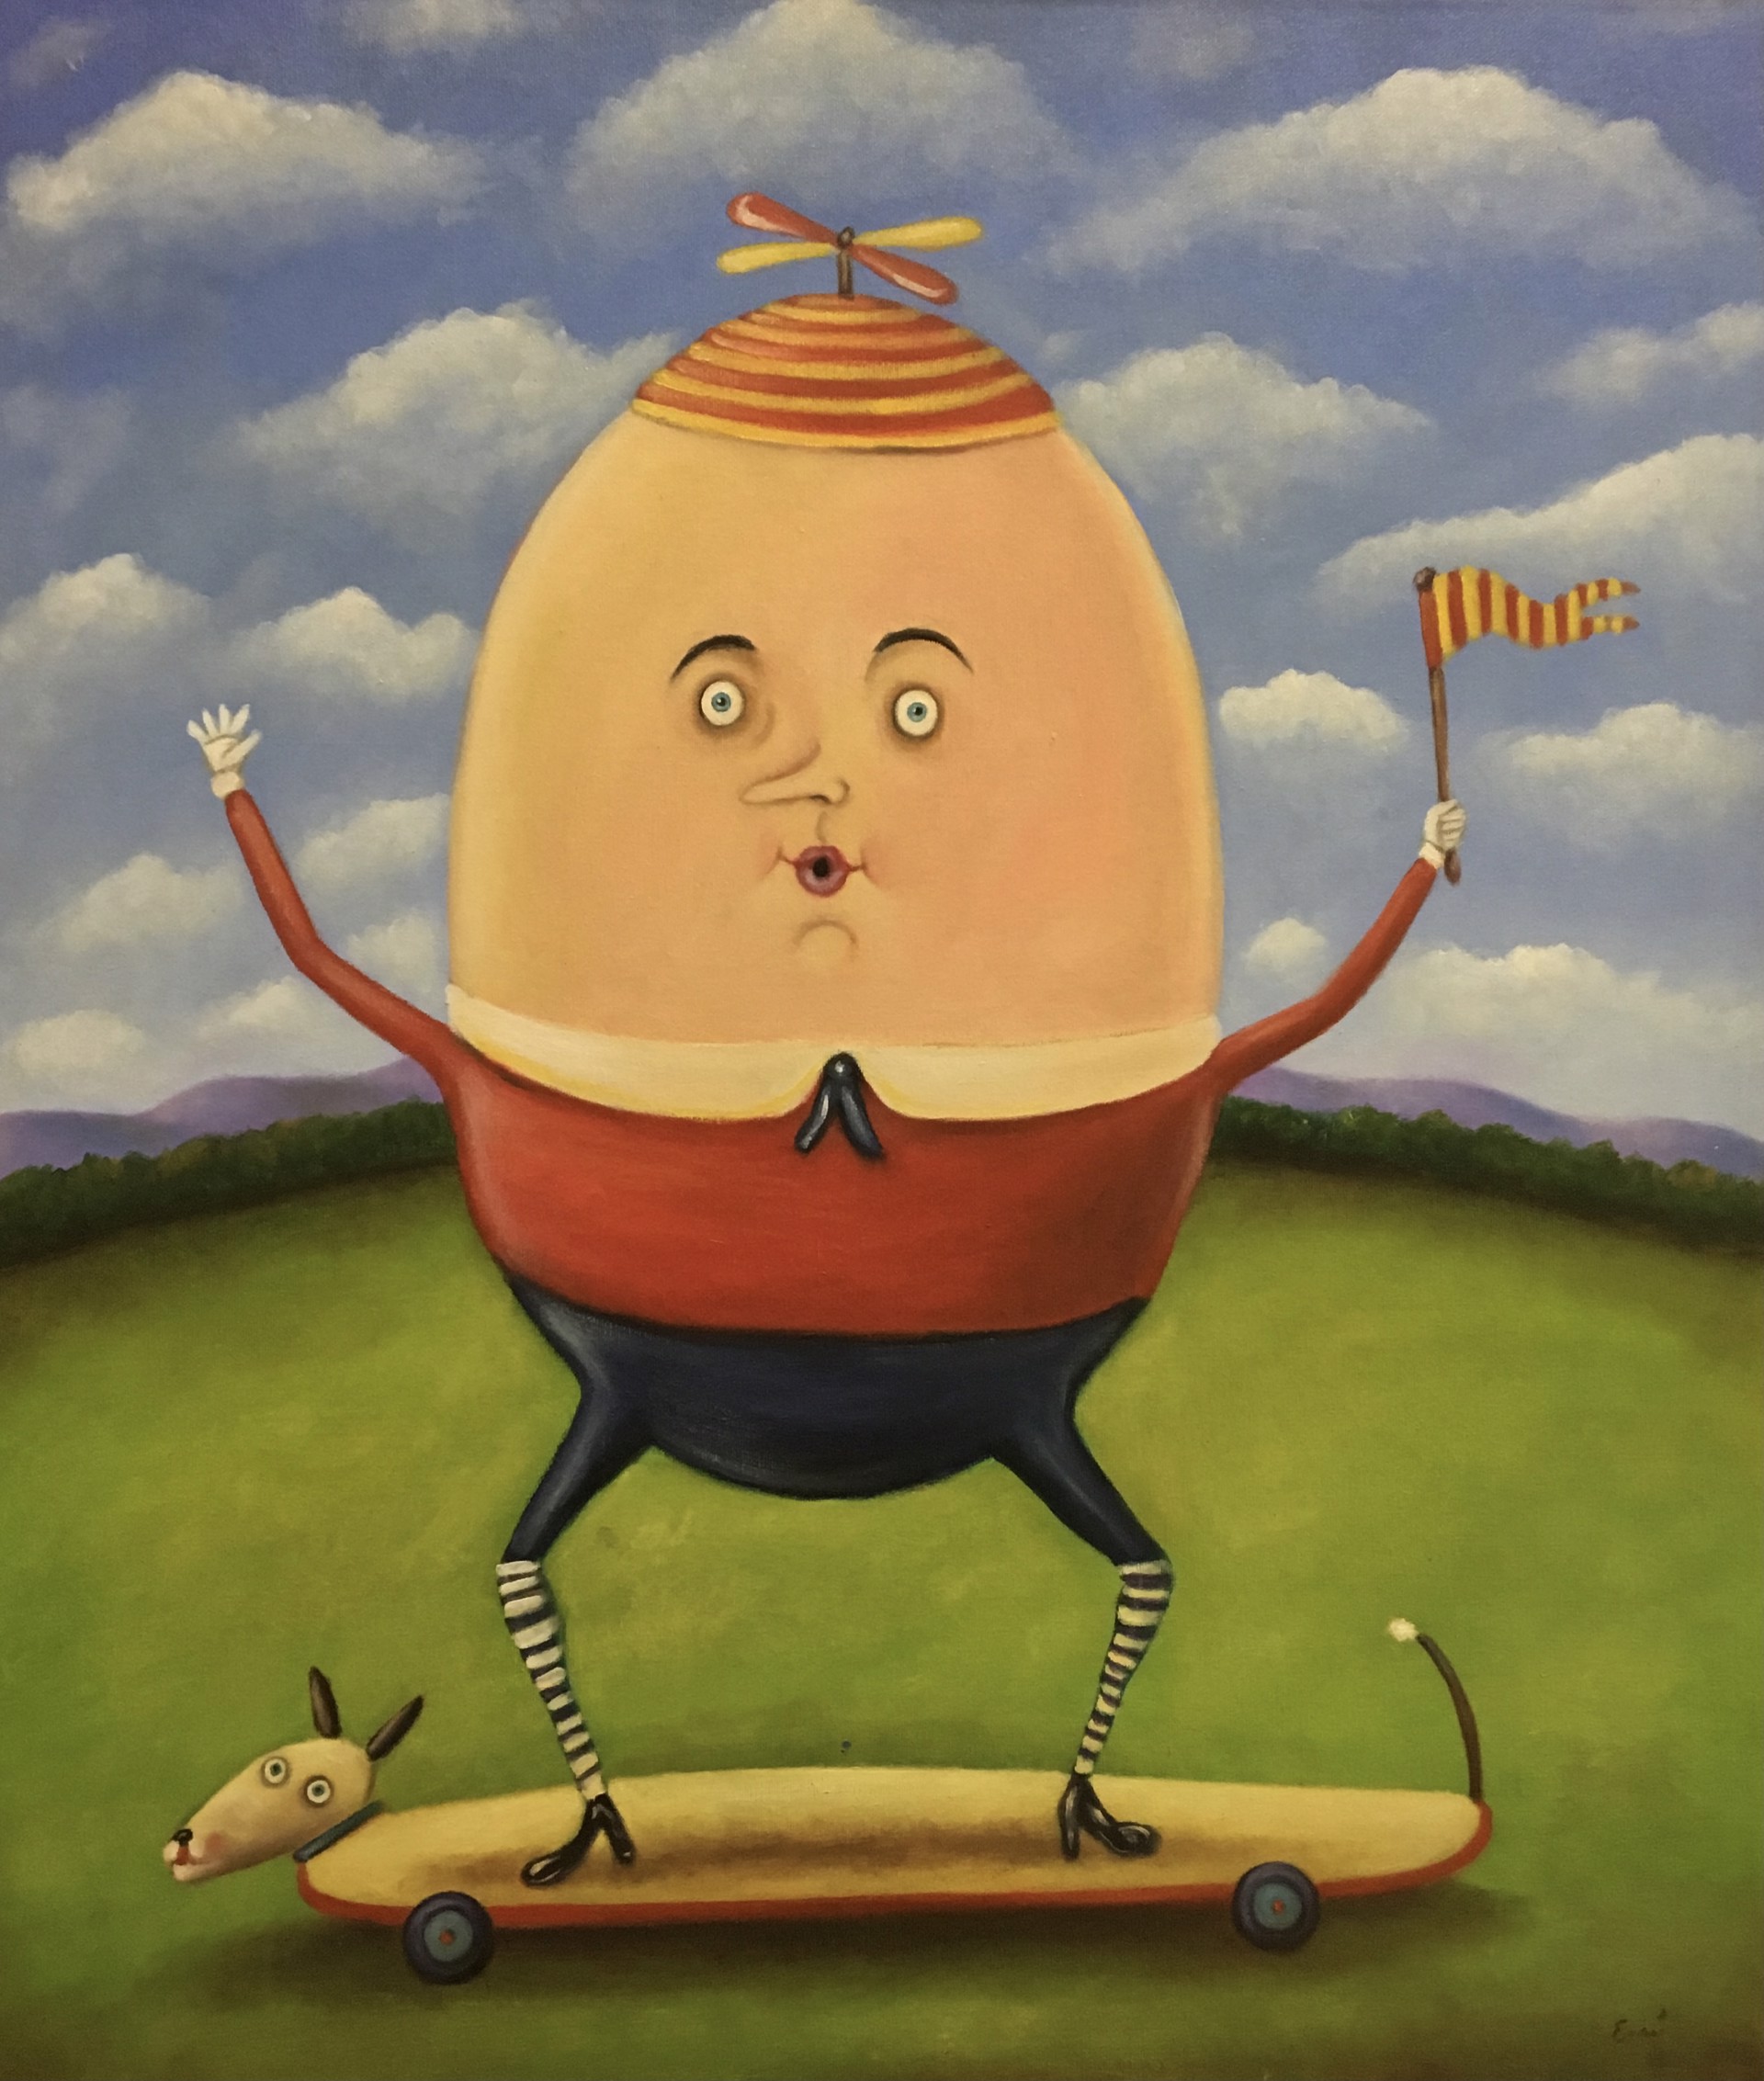 Humpty Dumpty by Esau Andrade